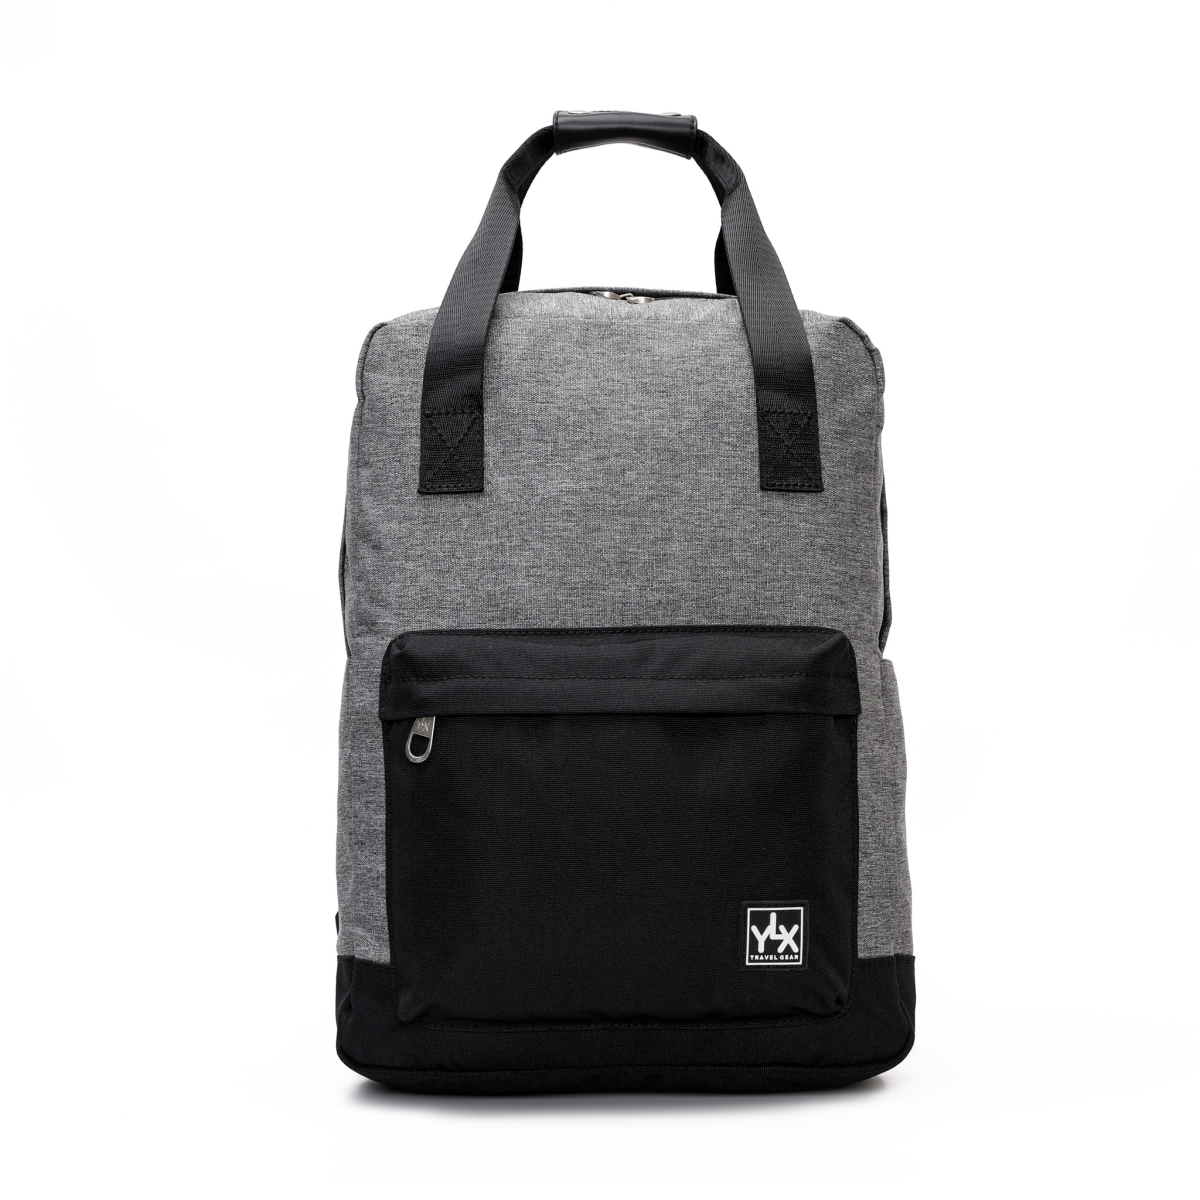 YLX Aspen Backpack | Dark Grey & Black